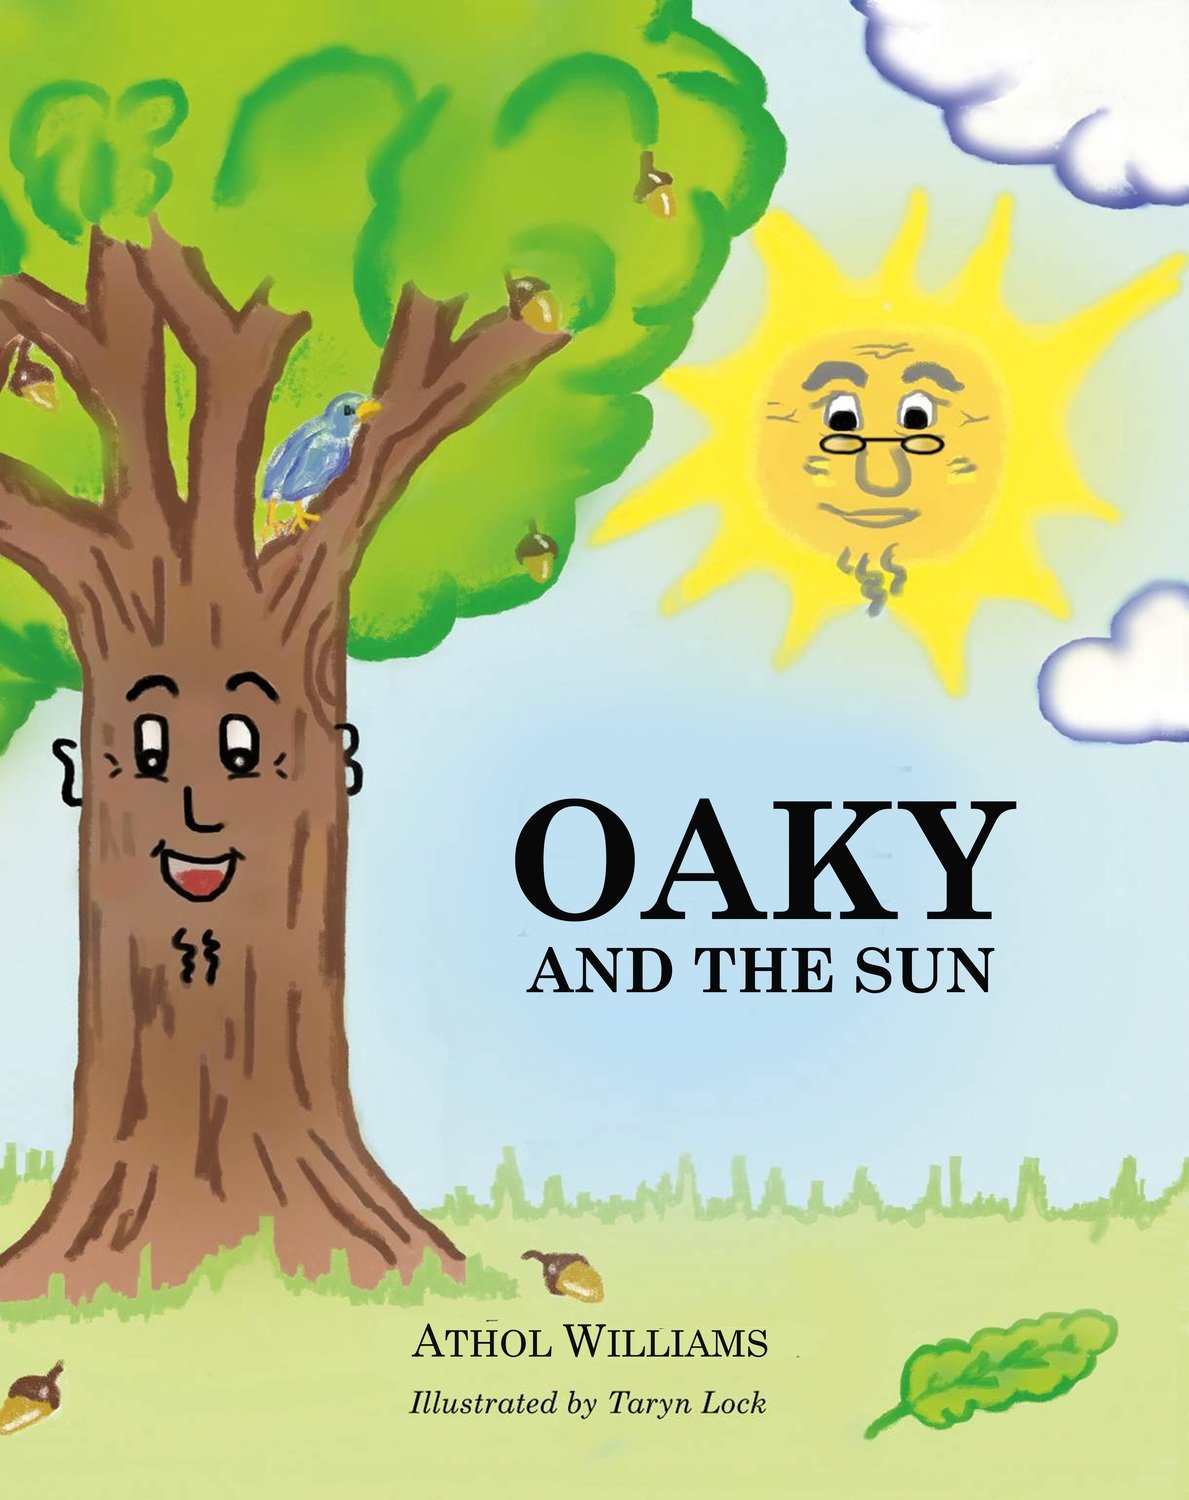 Oaky and the Sun